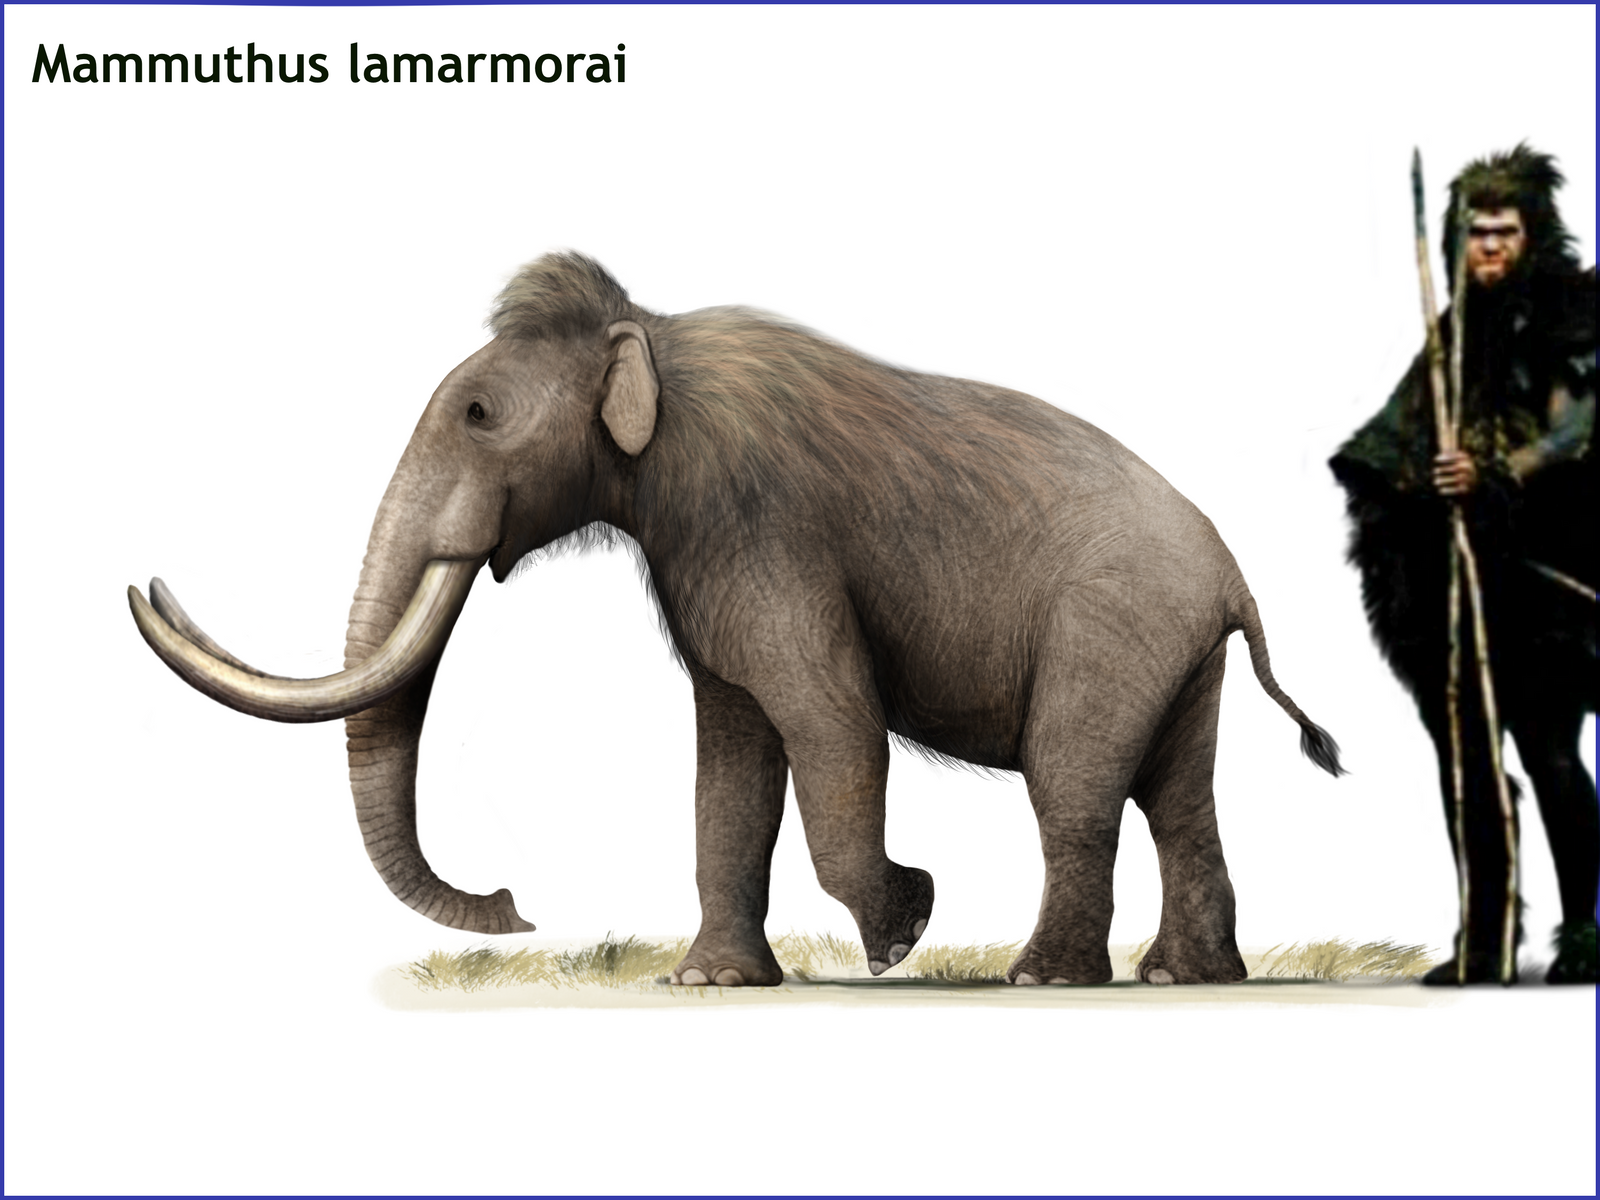 Mammuthus lamarmorai